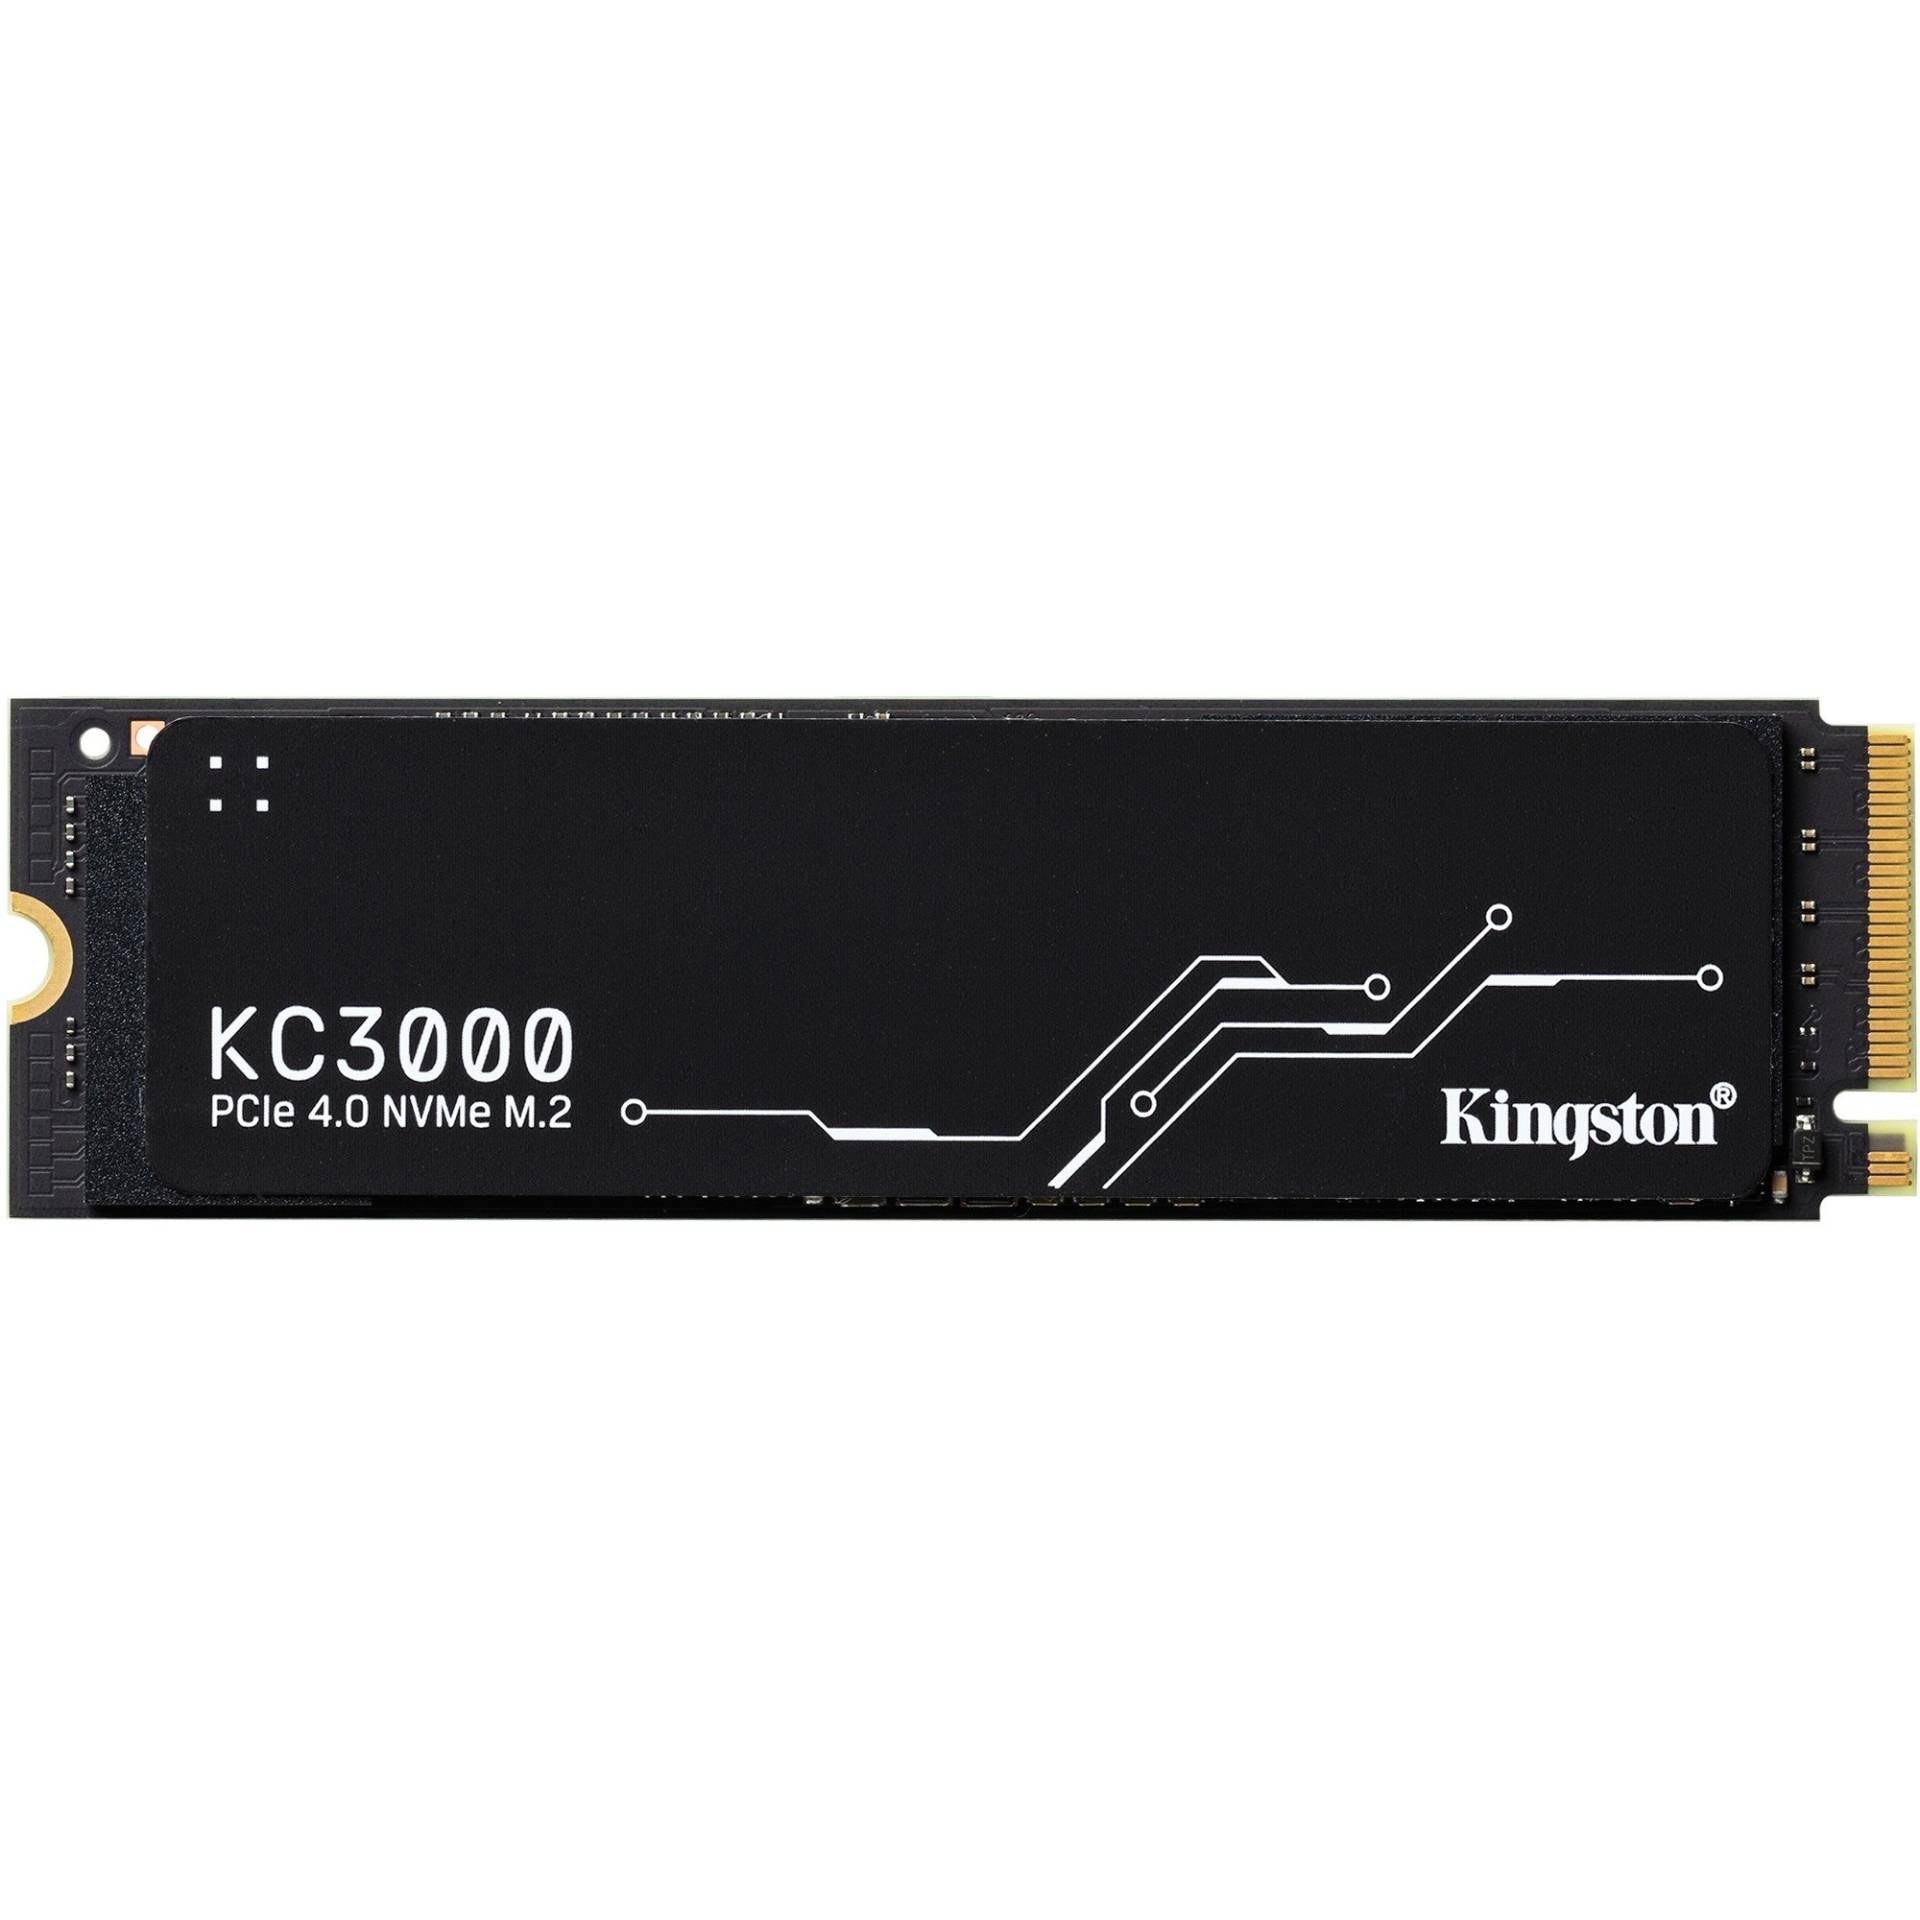 KC3000 2048 GB, SSD von Kingston